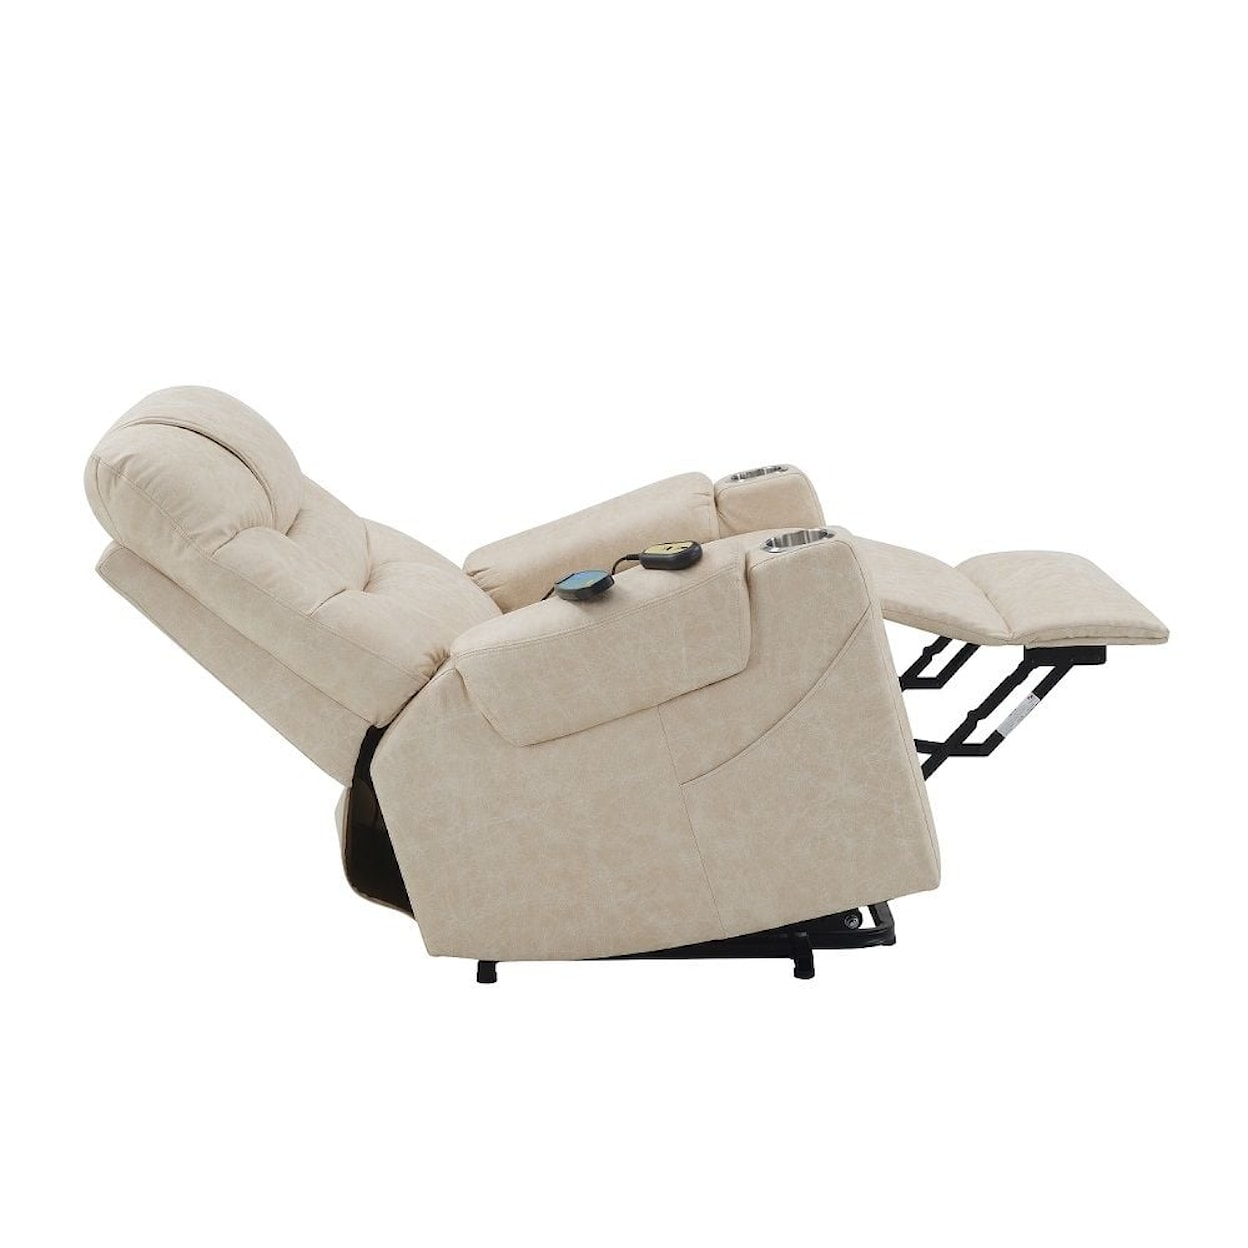 Acme Furniture Nairi Power Recliner W/Lift & Heating & Massage